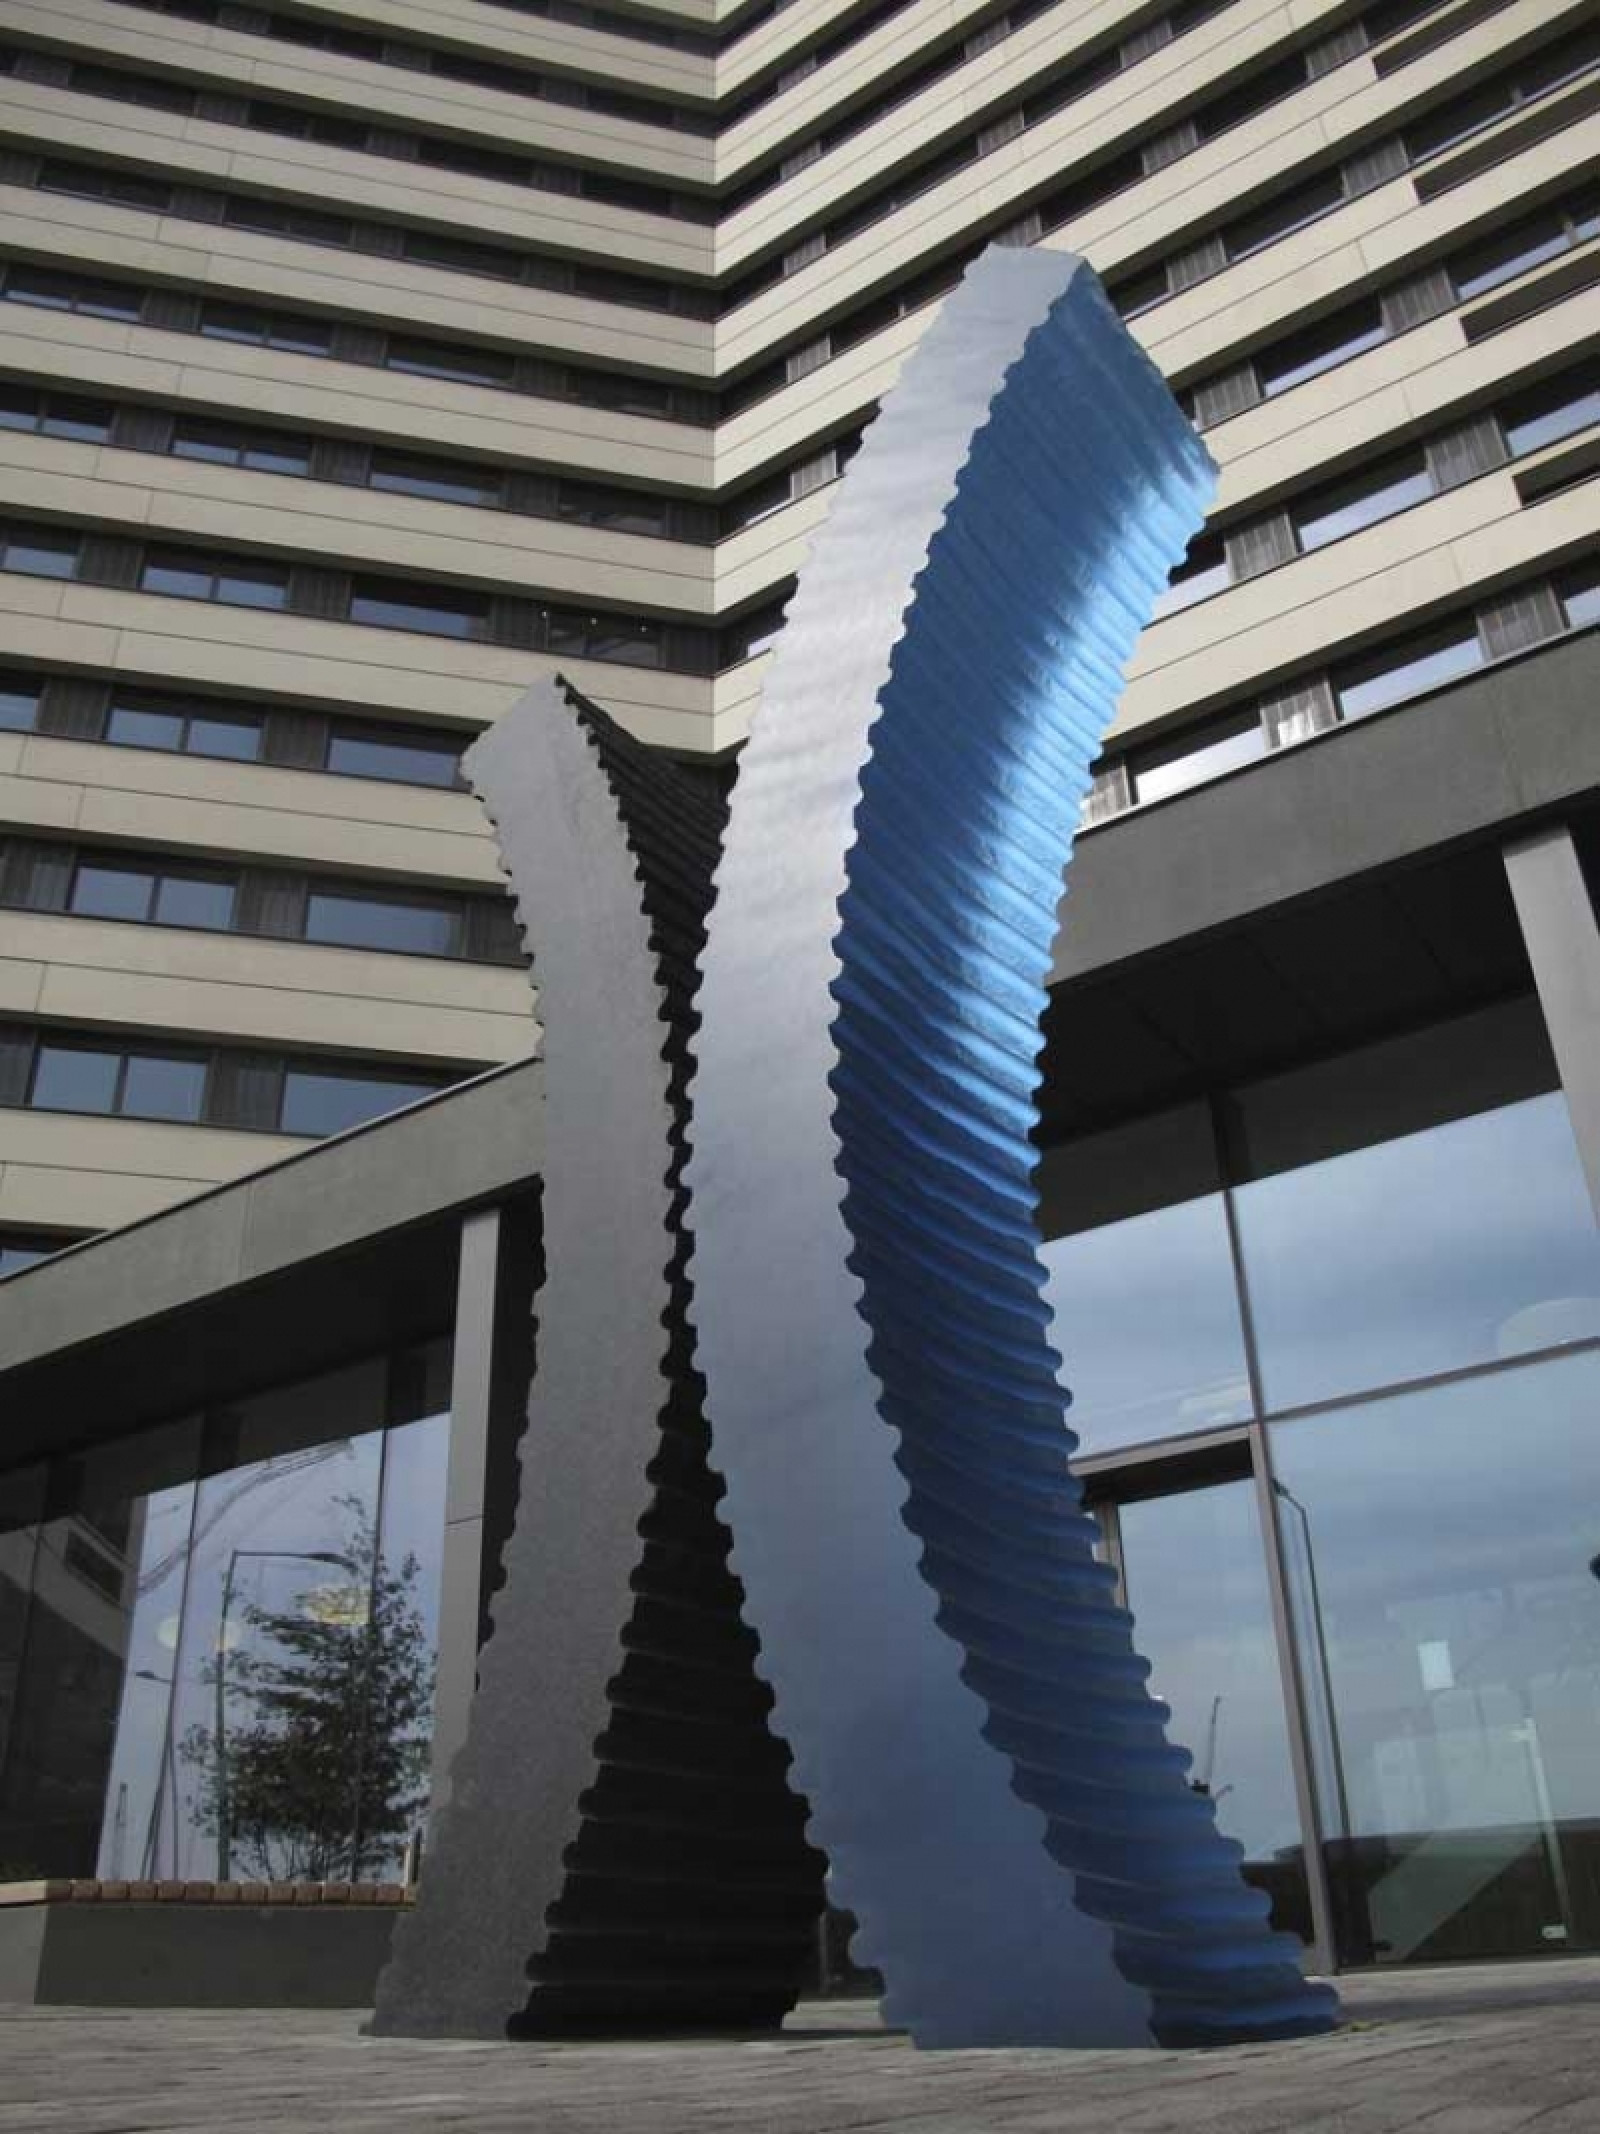 Huge London sculpture made in Birmingham!